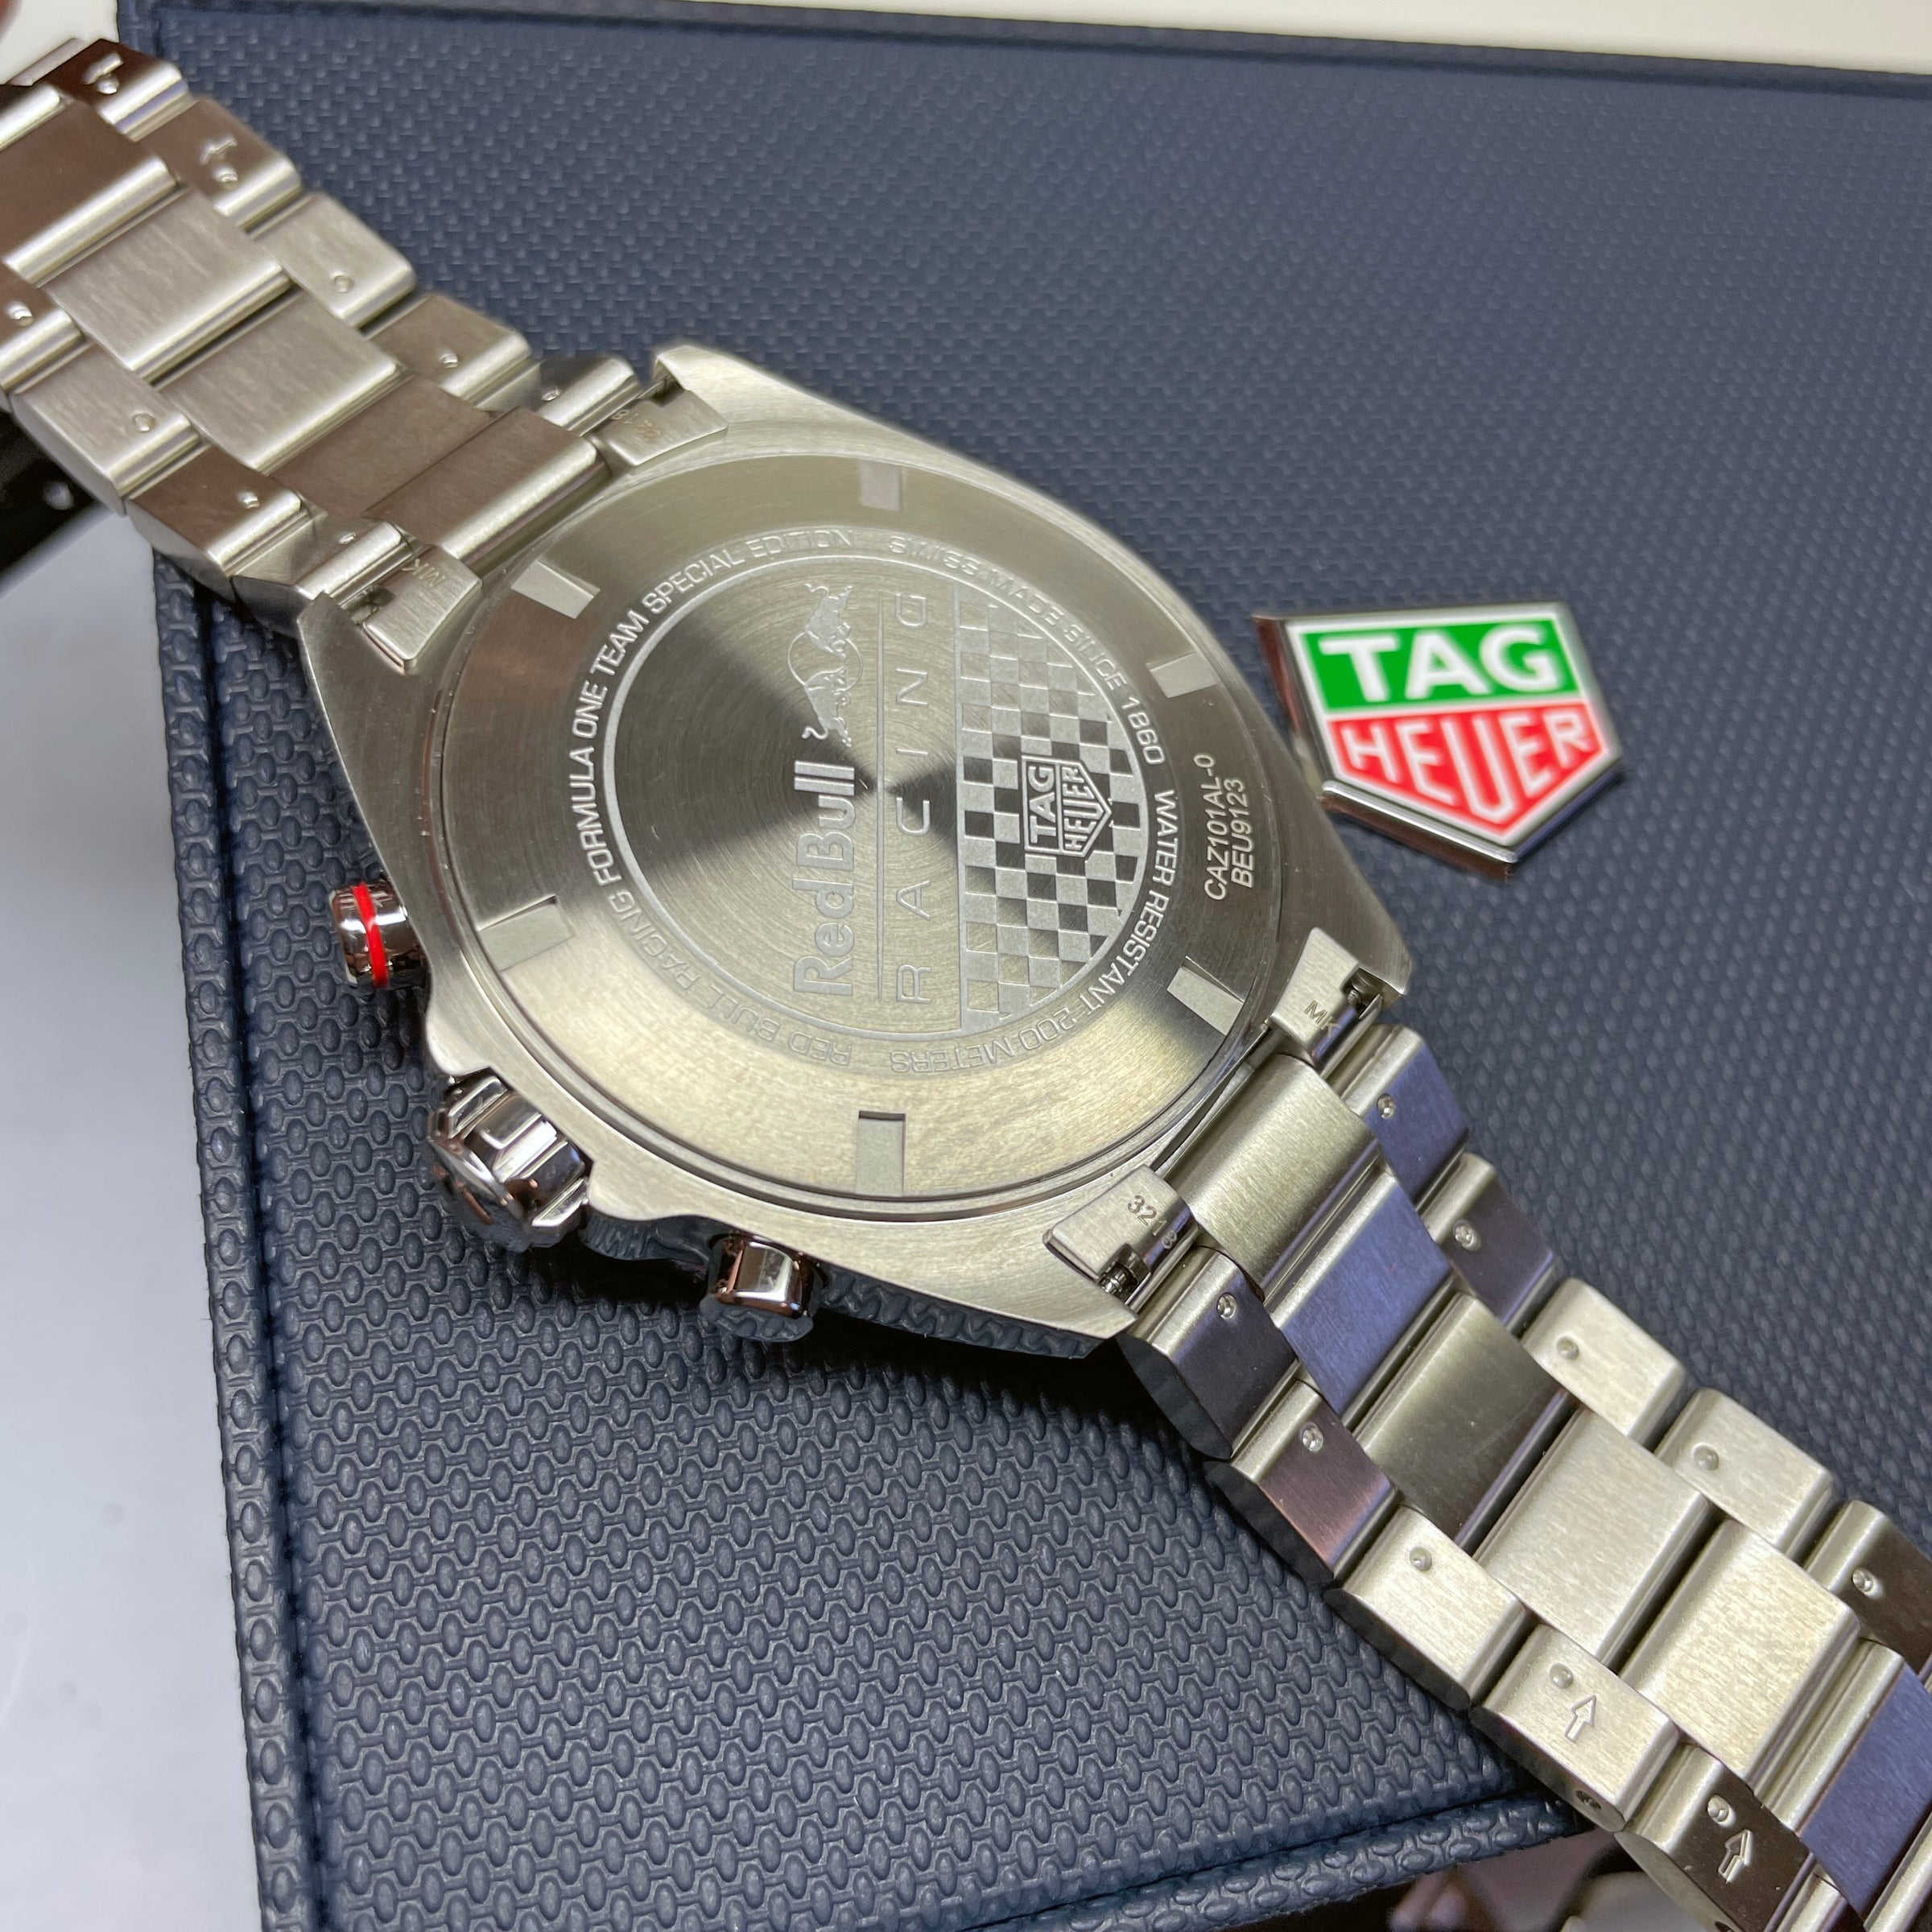 Tag Heuer Men's WAZ1010.BA0842 Formula One Stainless Steel Watch, 43mm, Silver